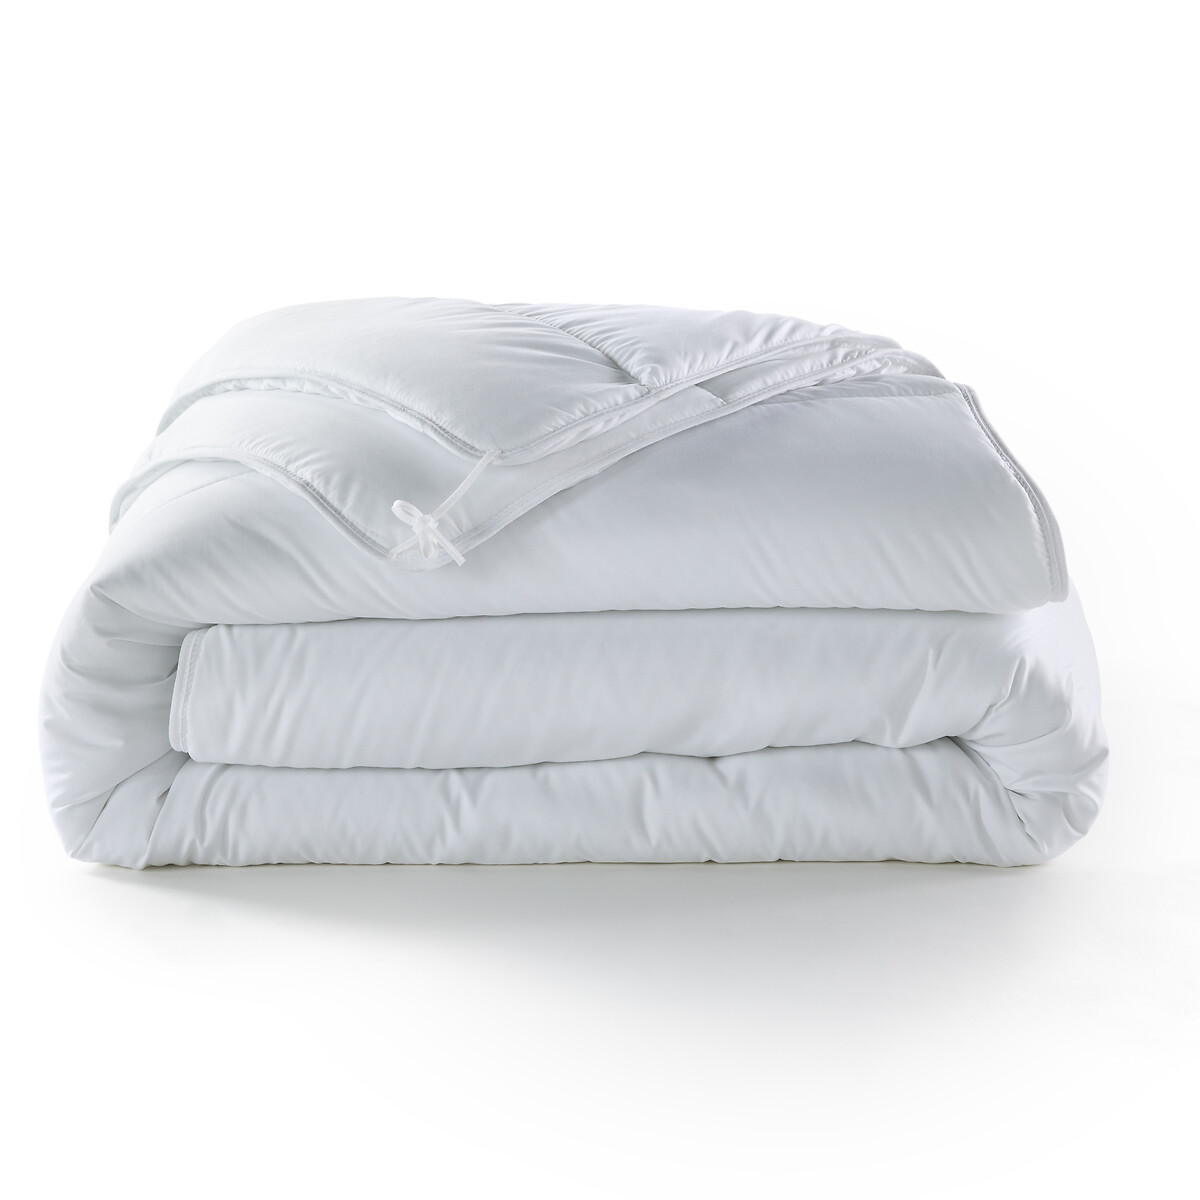 Одеяло La Redoute Синтетическое  сезона с обработкой BI-OME 200 x 200 см белый, размер 200 x 200 см - фото 2